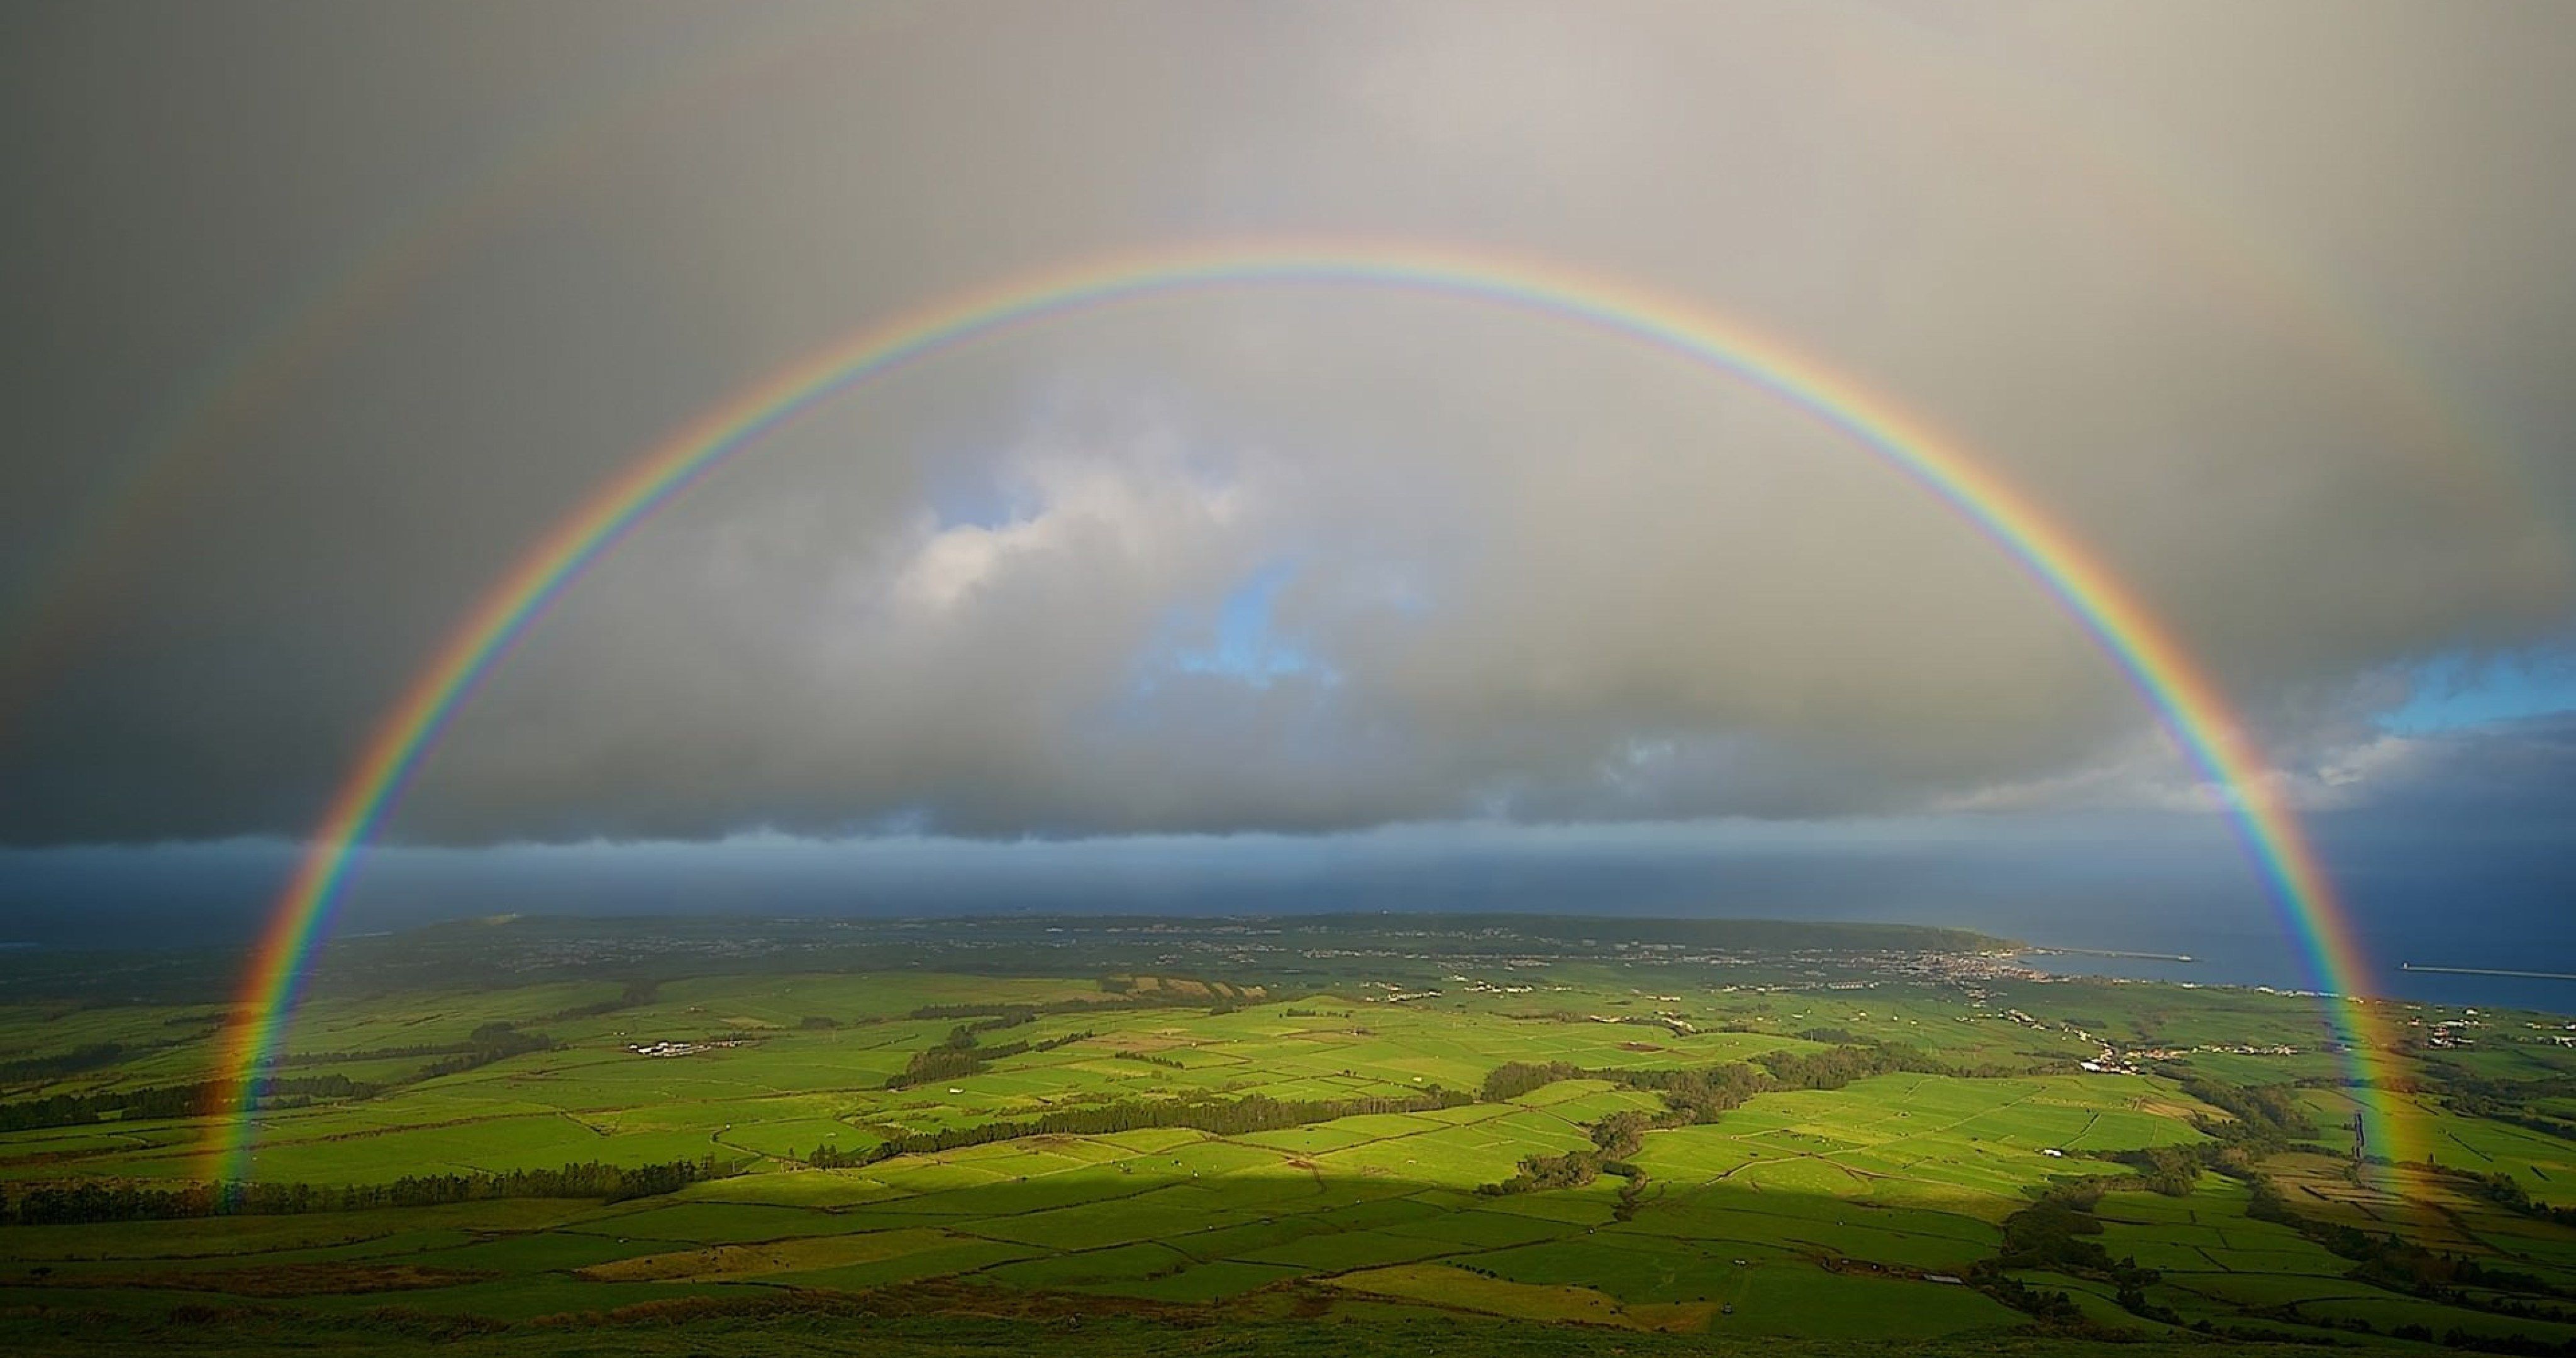 rainbow in clouds 4k ultra HD wallpaper. Sky image, Rainbow